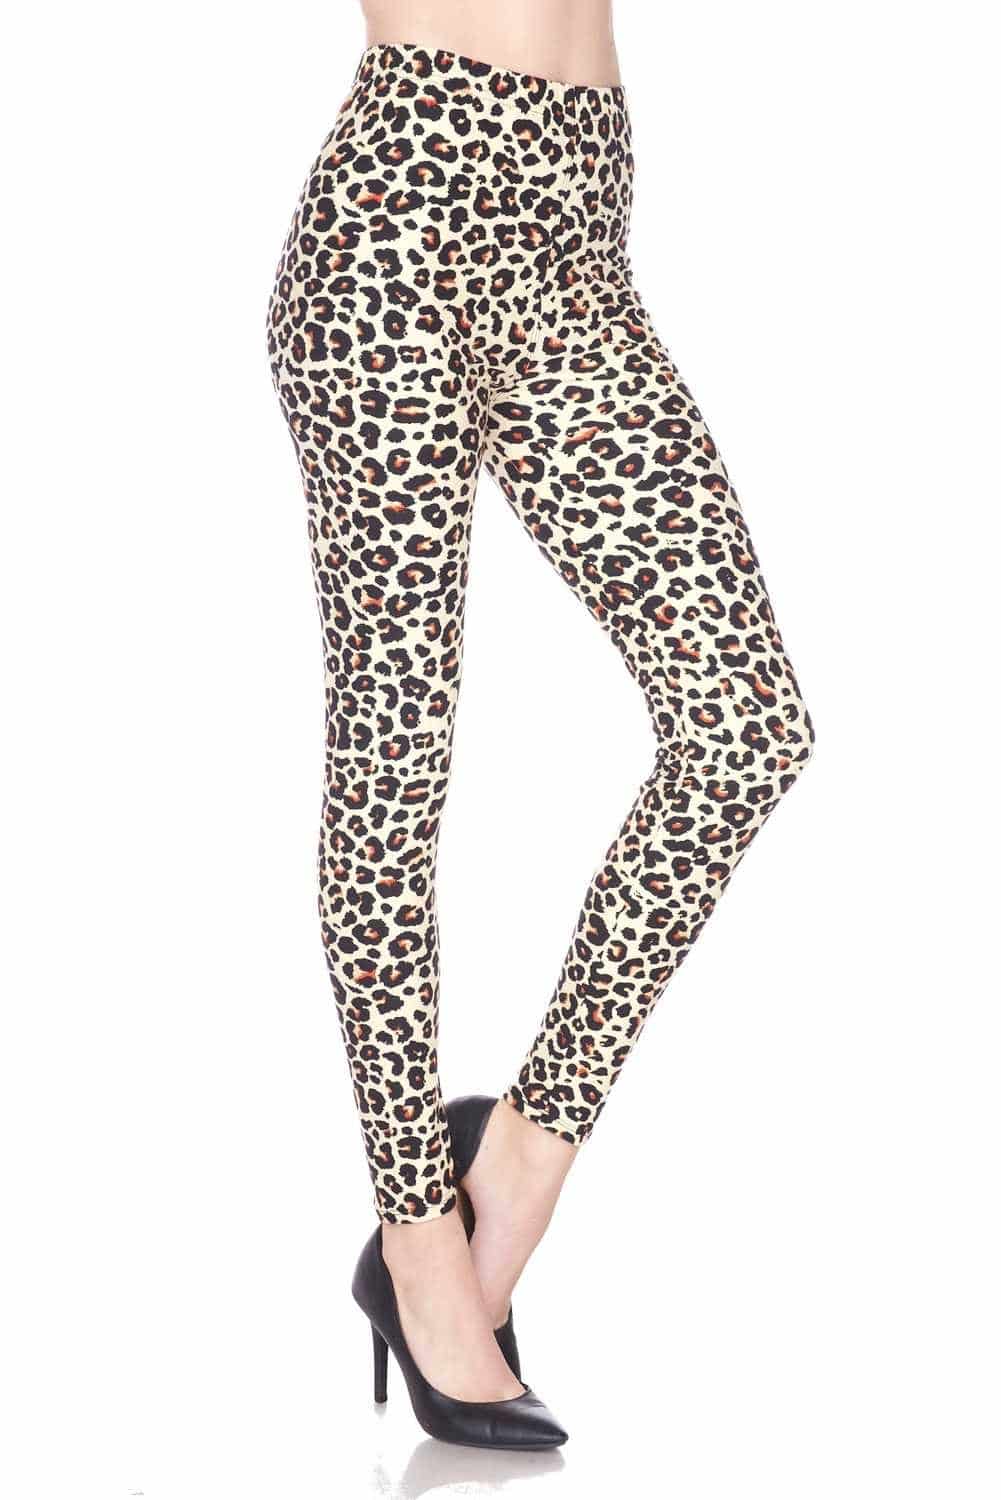 Stylish Leopard Print Ankle Leggings - Its All Leggings